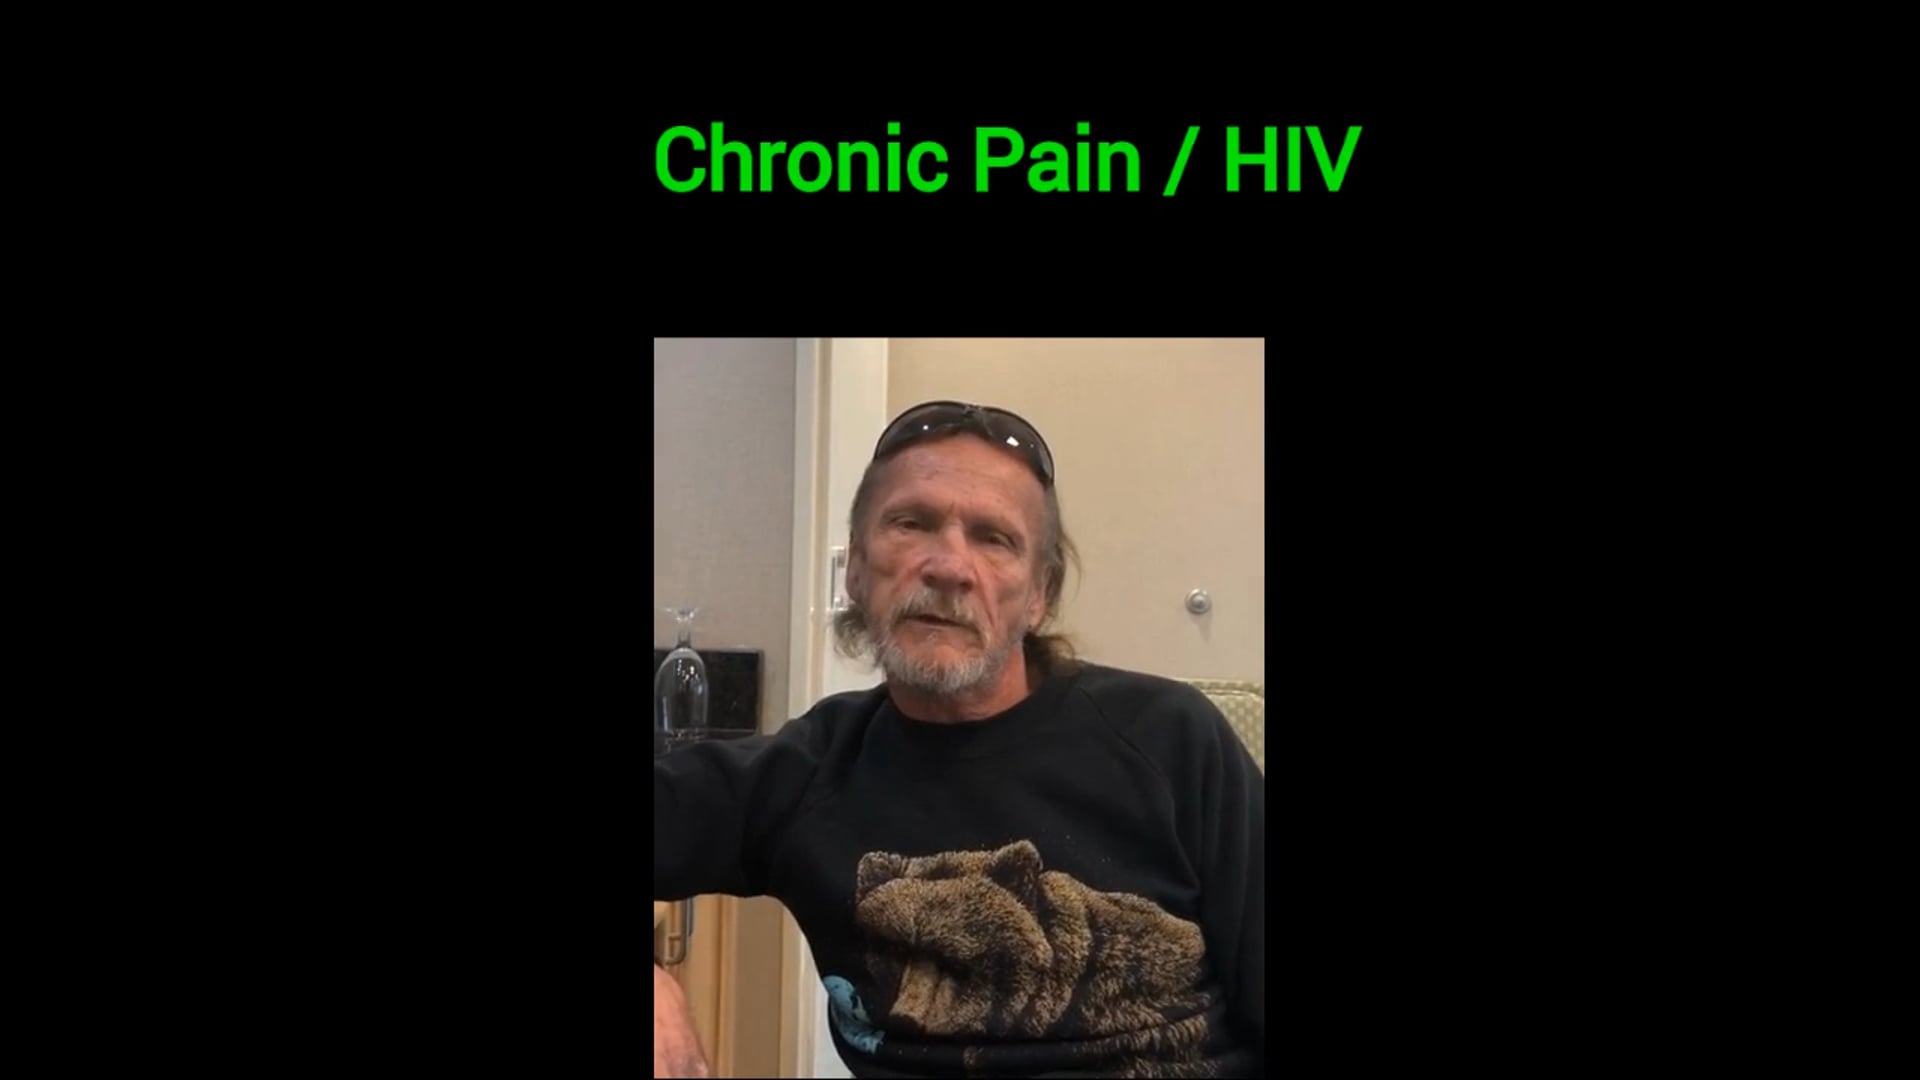 HIV/Chronic Pain